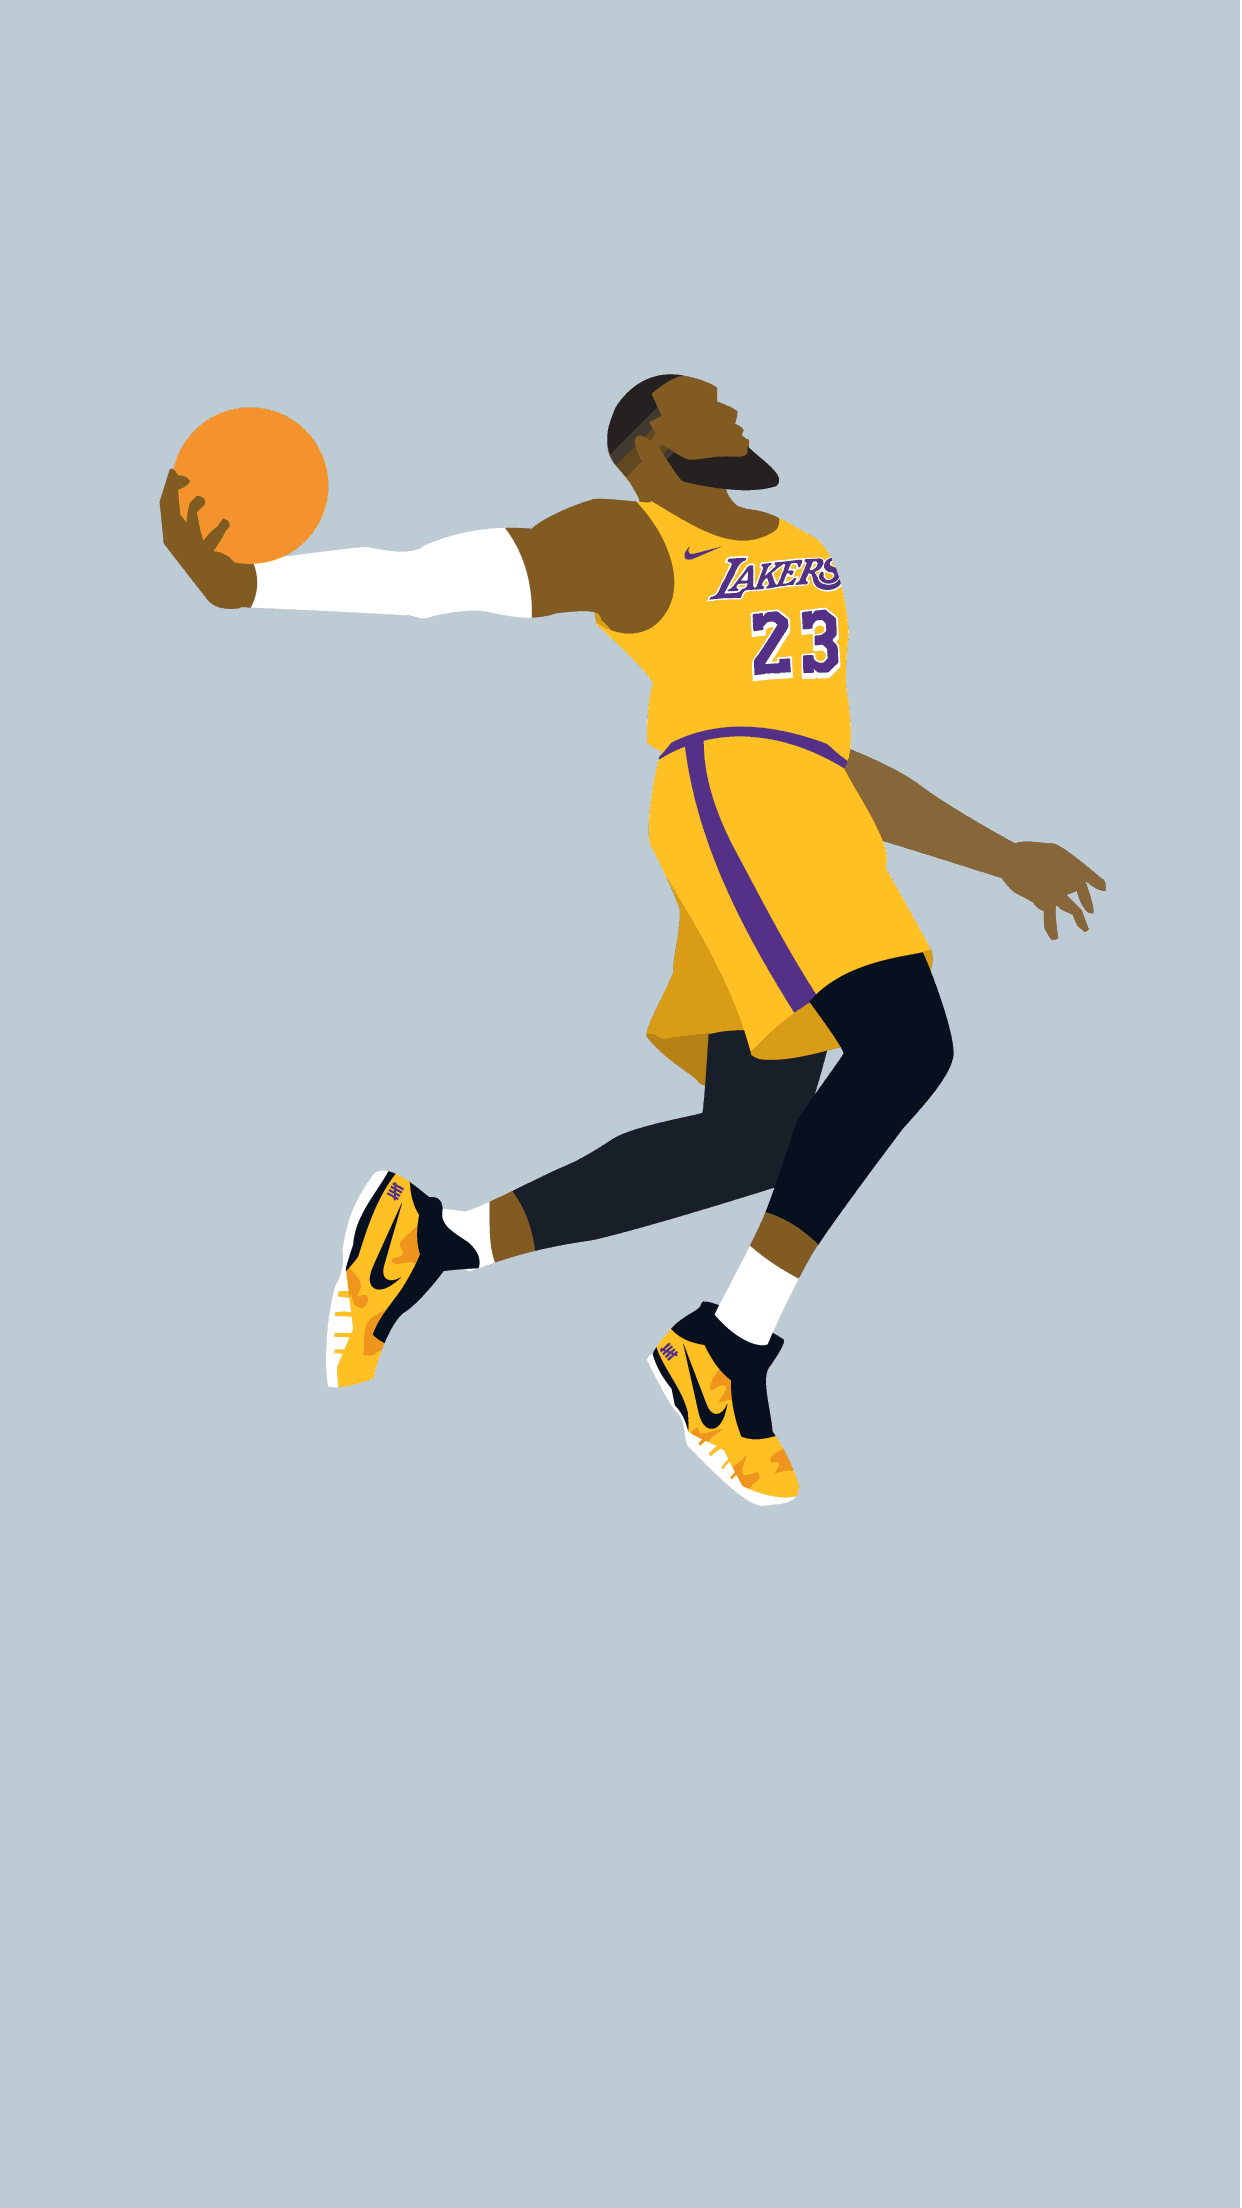 Lebron James 23 Lakers Wallpaper HD